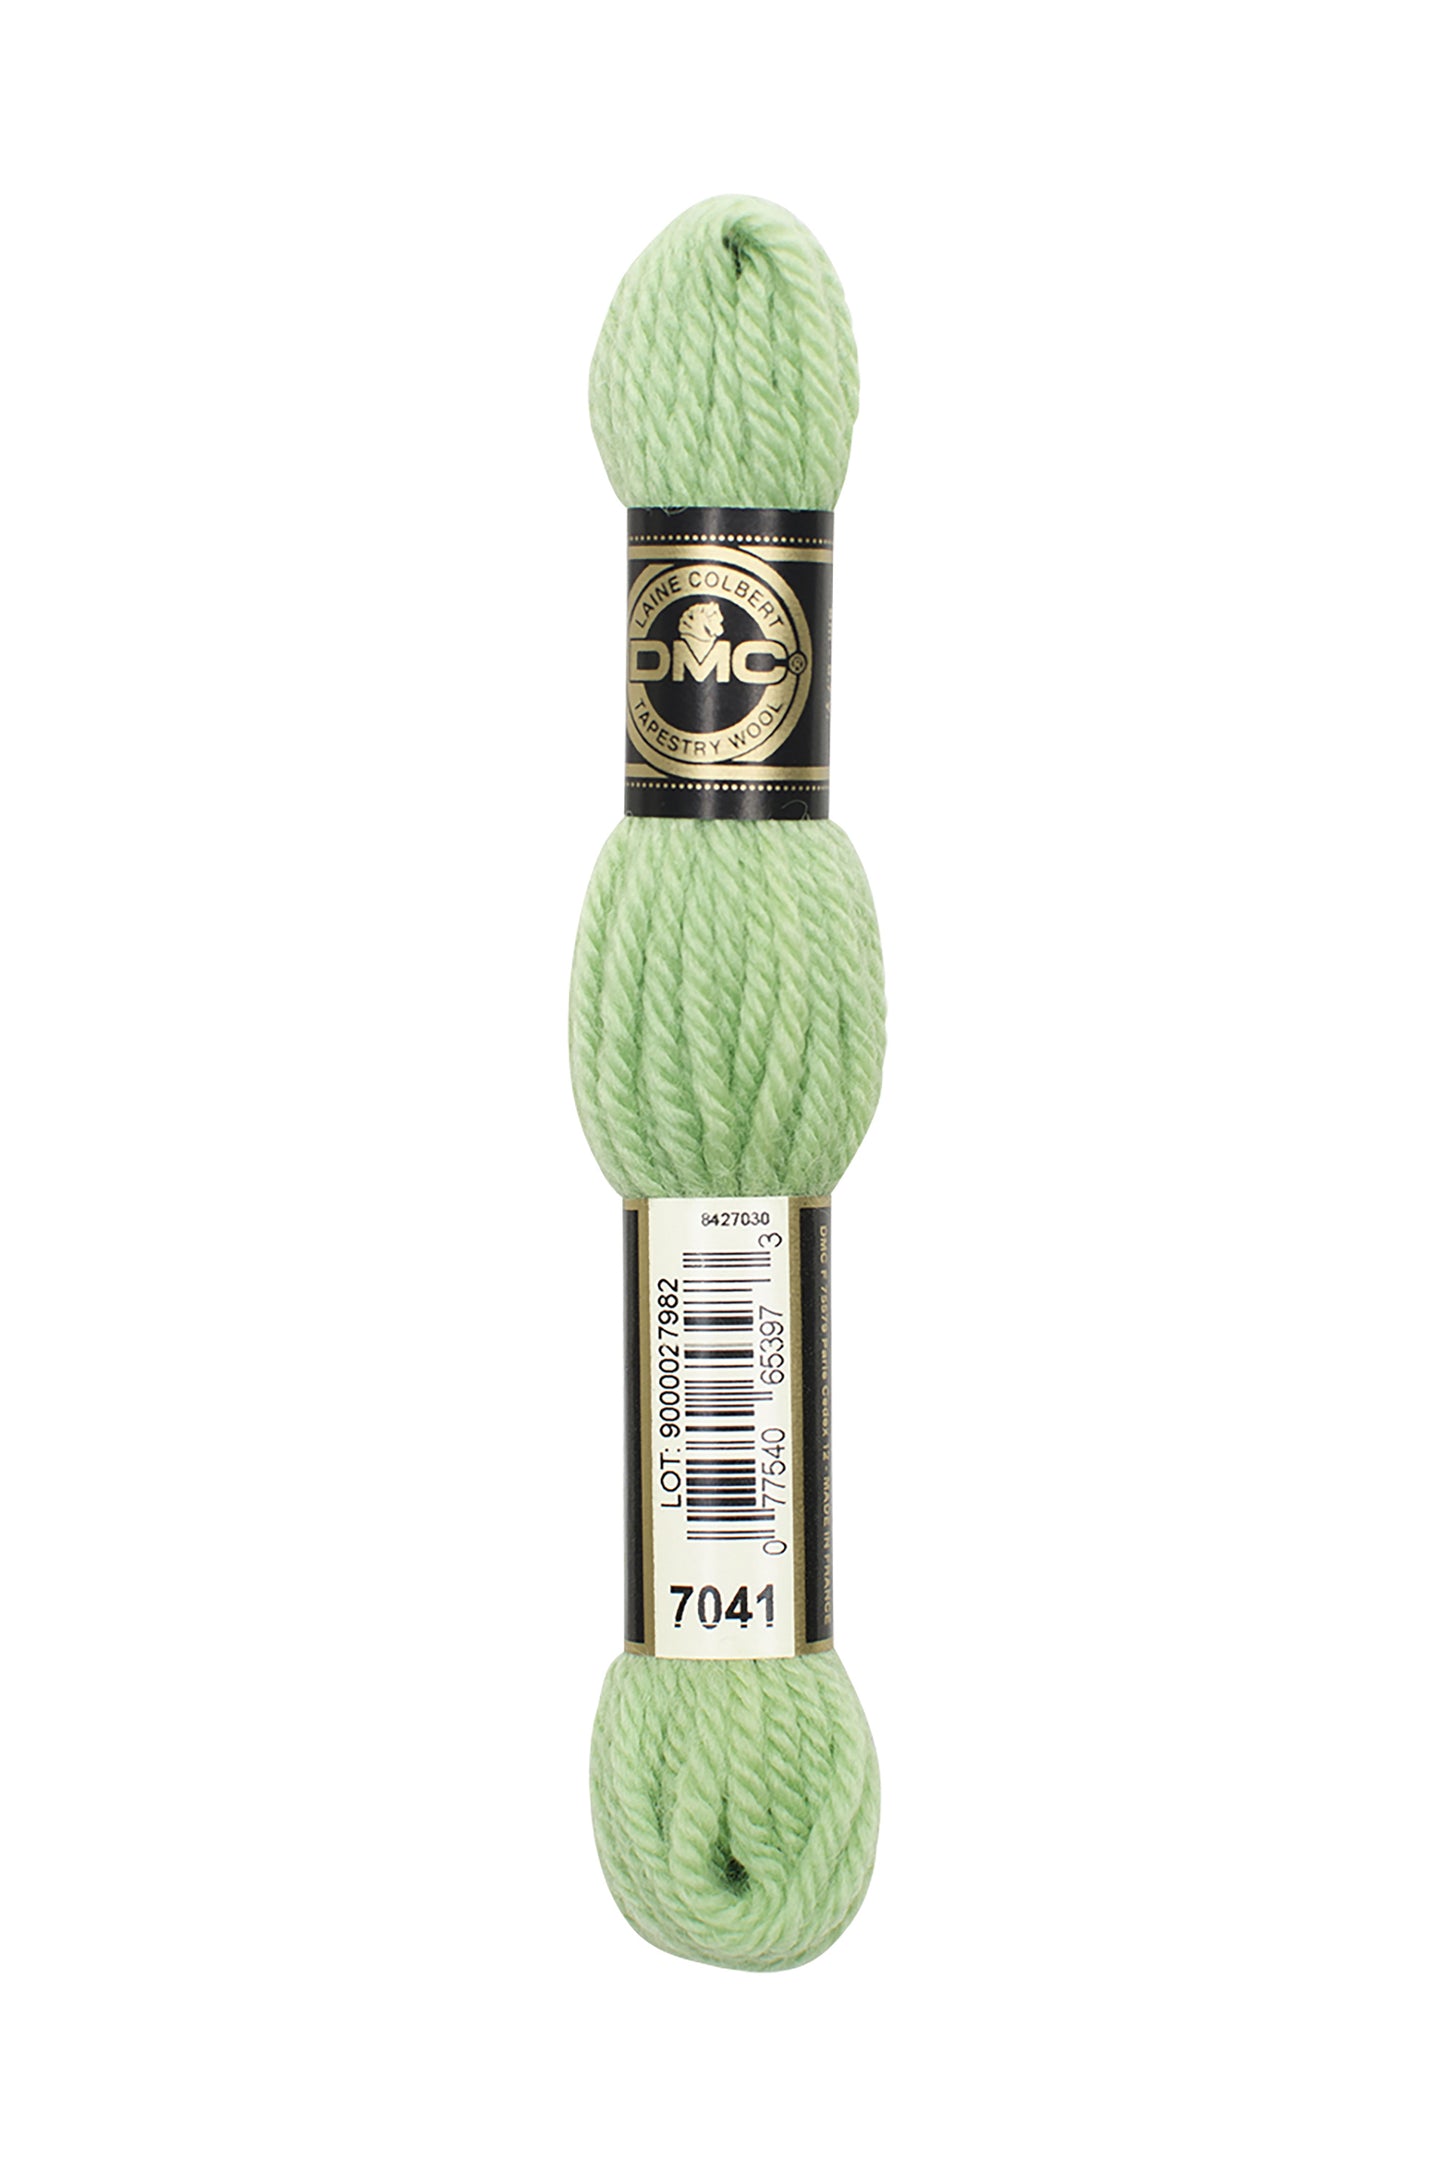 7041 – DMC Tapestry Wool